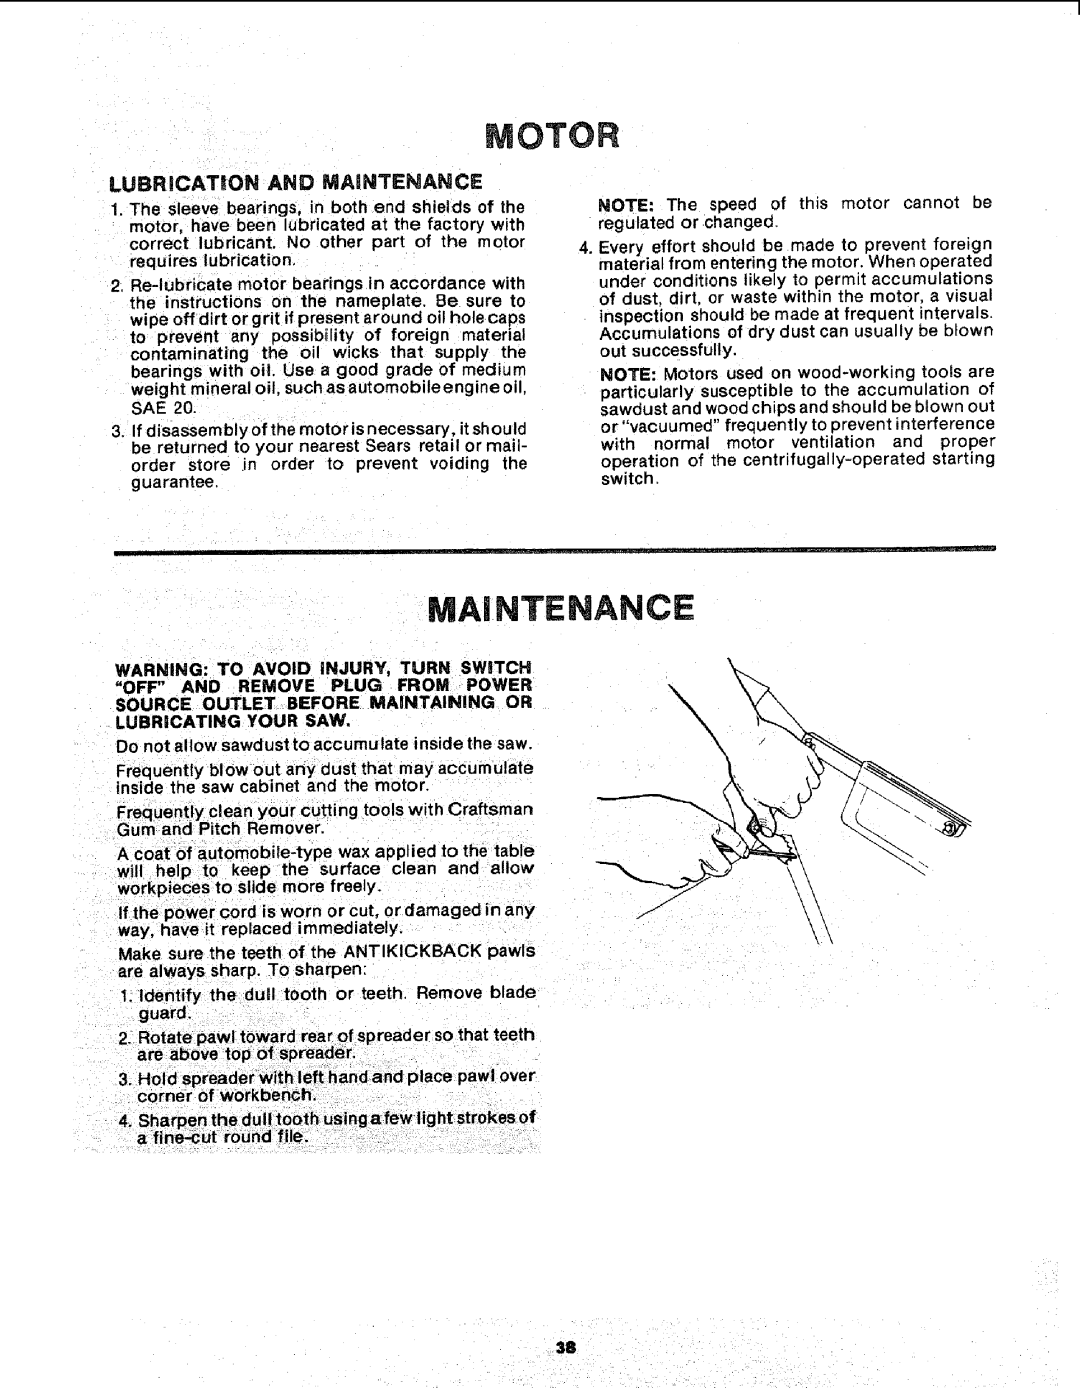 Sears 113.241591 owner manual Motor, Maintenance, LUBRICATmON AND MAINTENANCE 